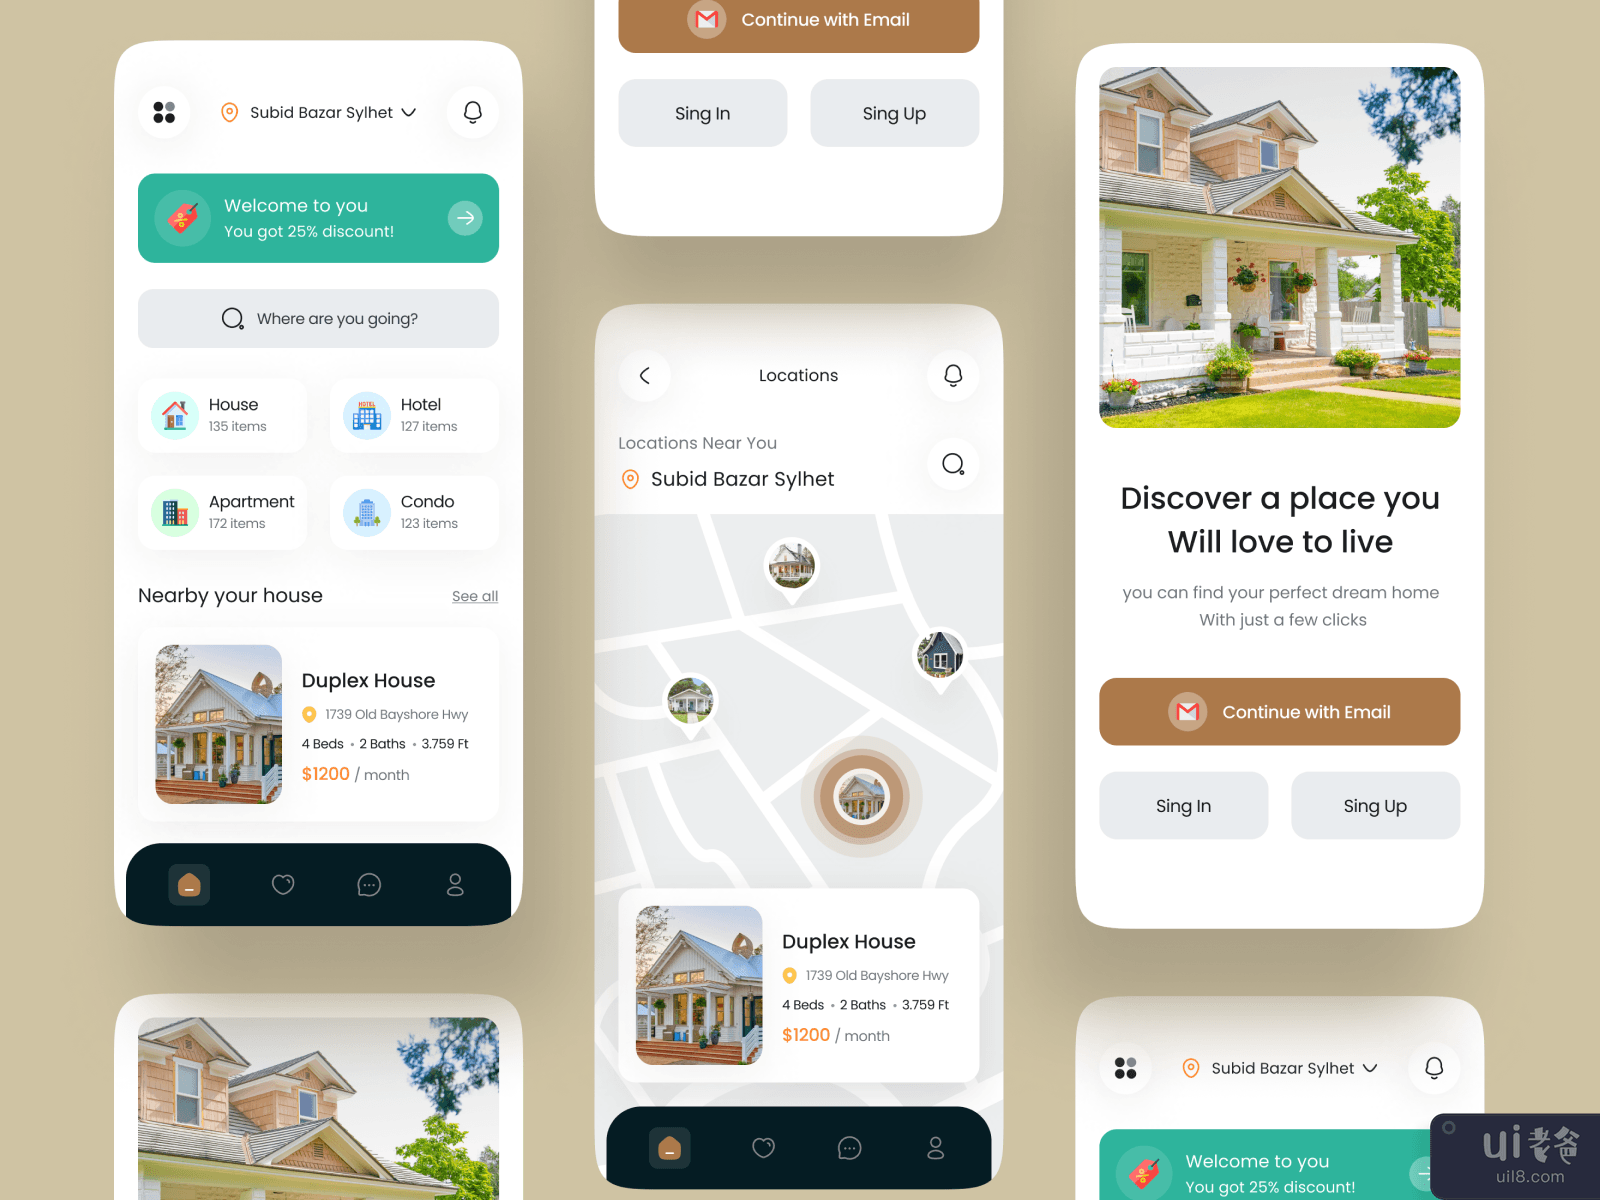 Real Estate Mobile App Design